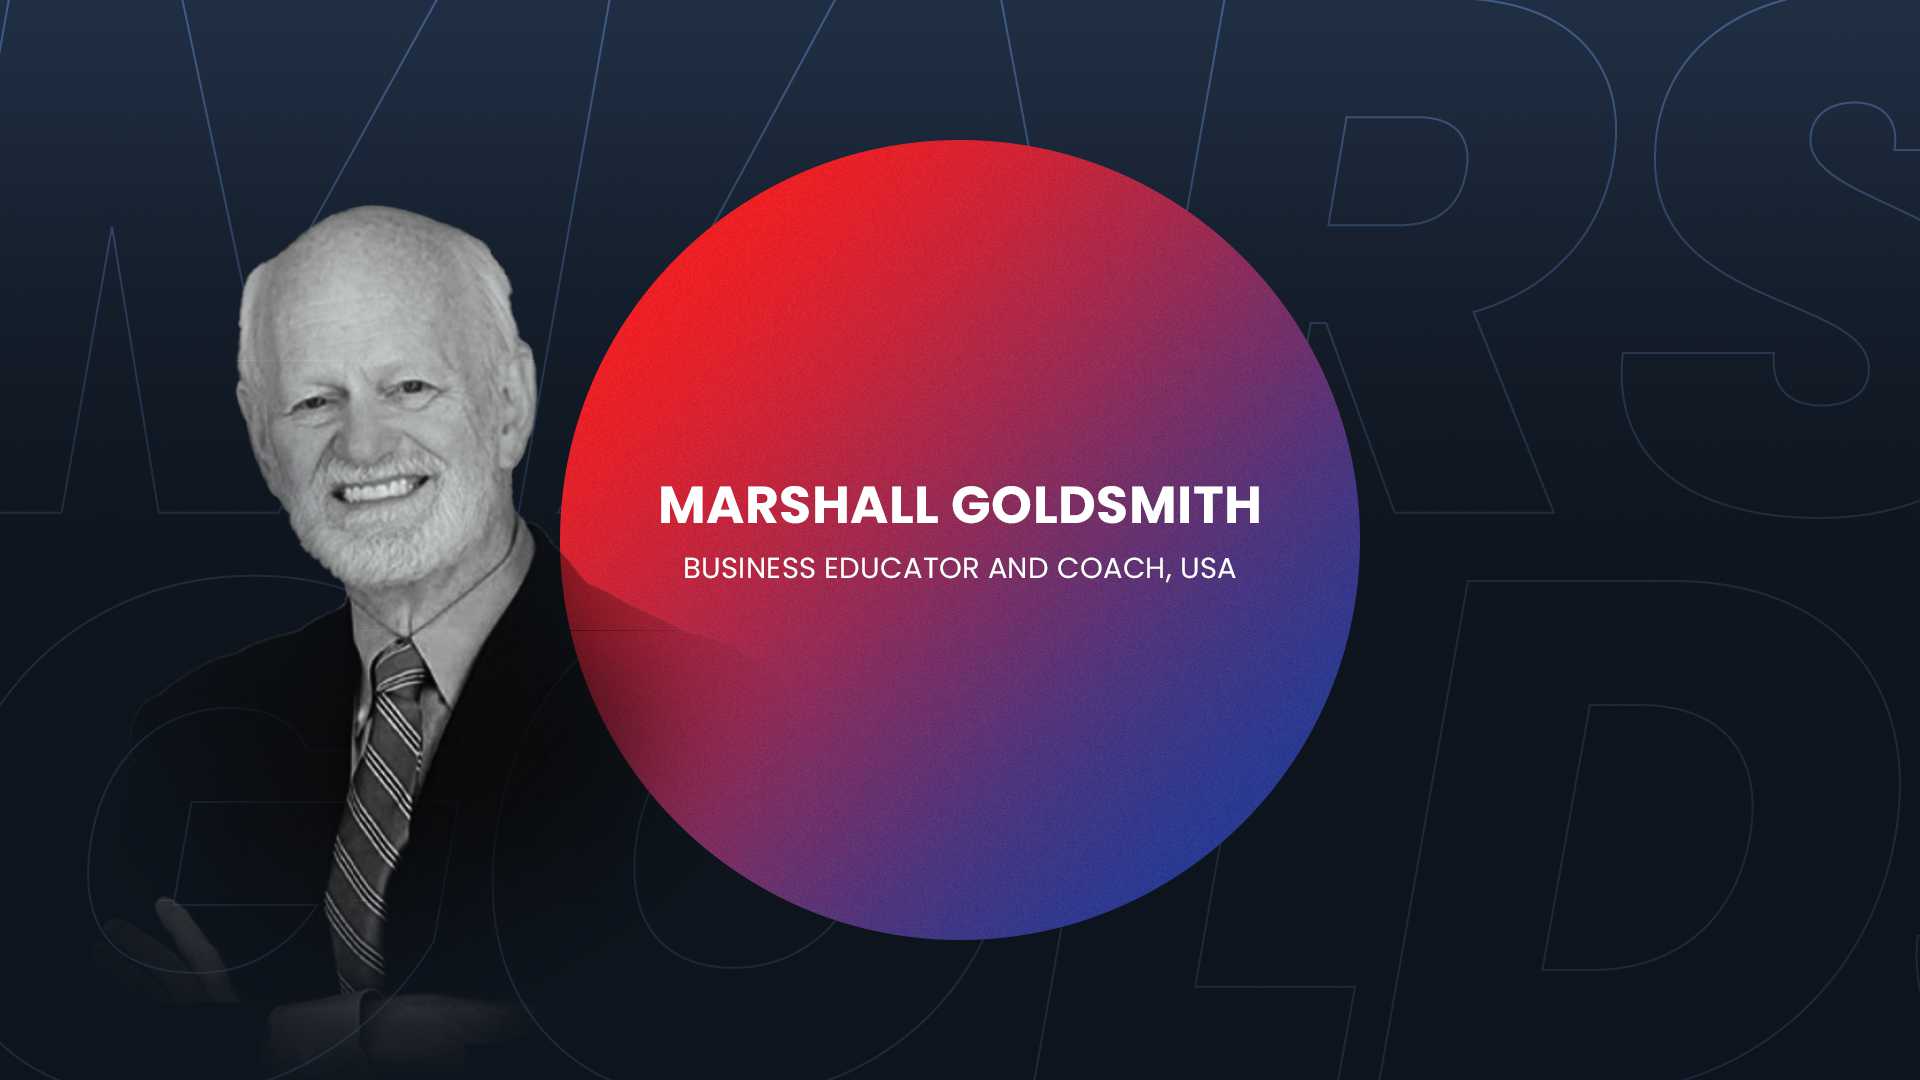 Prof. Marshall Goldsmith